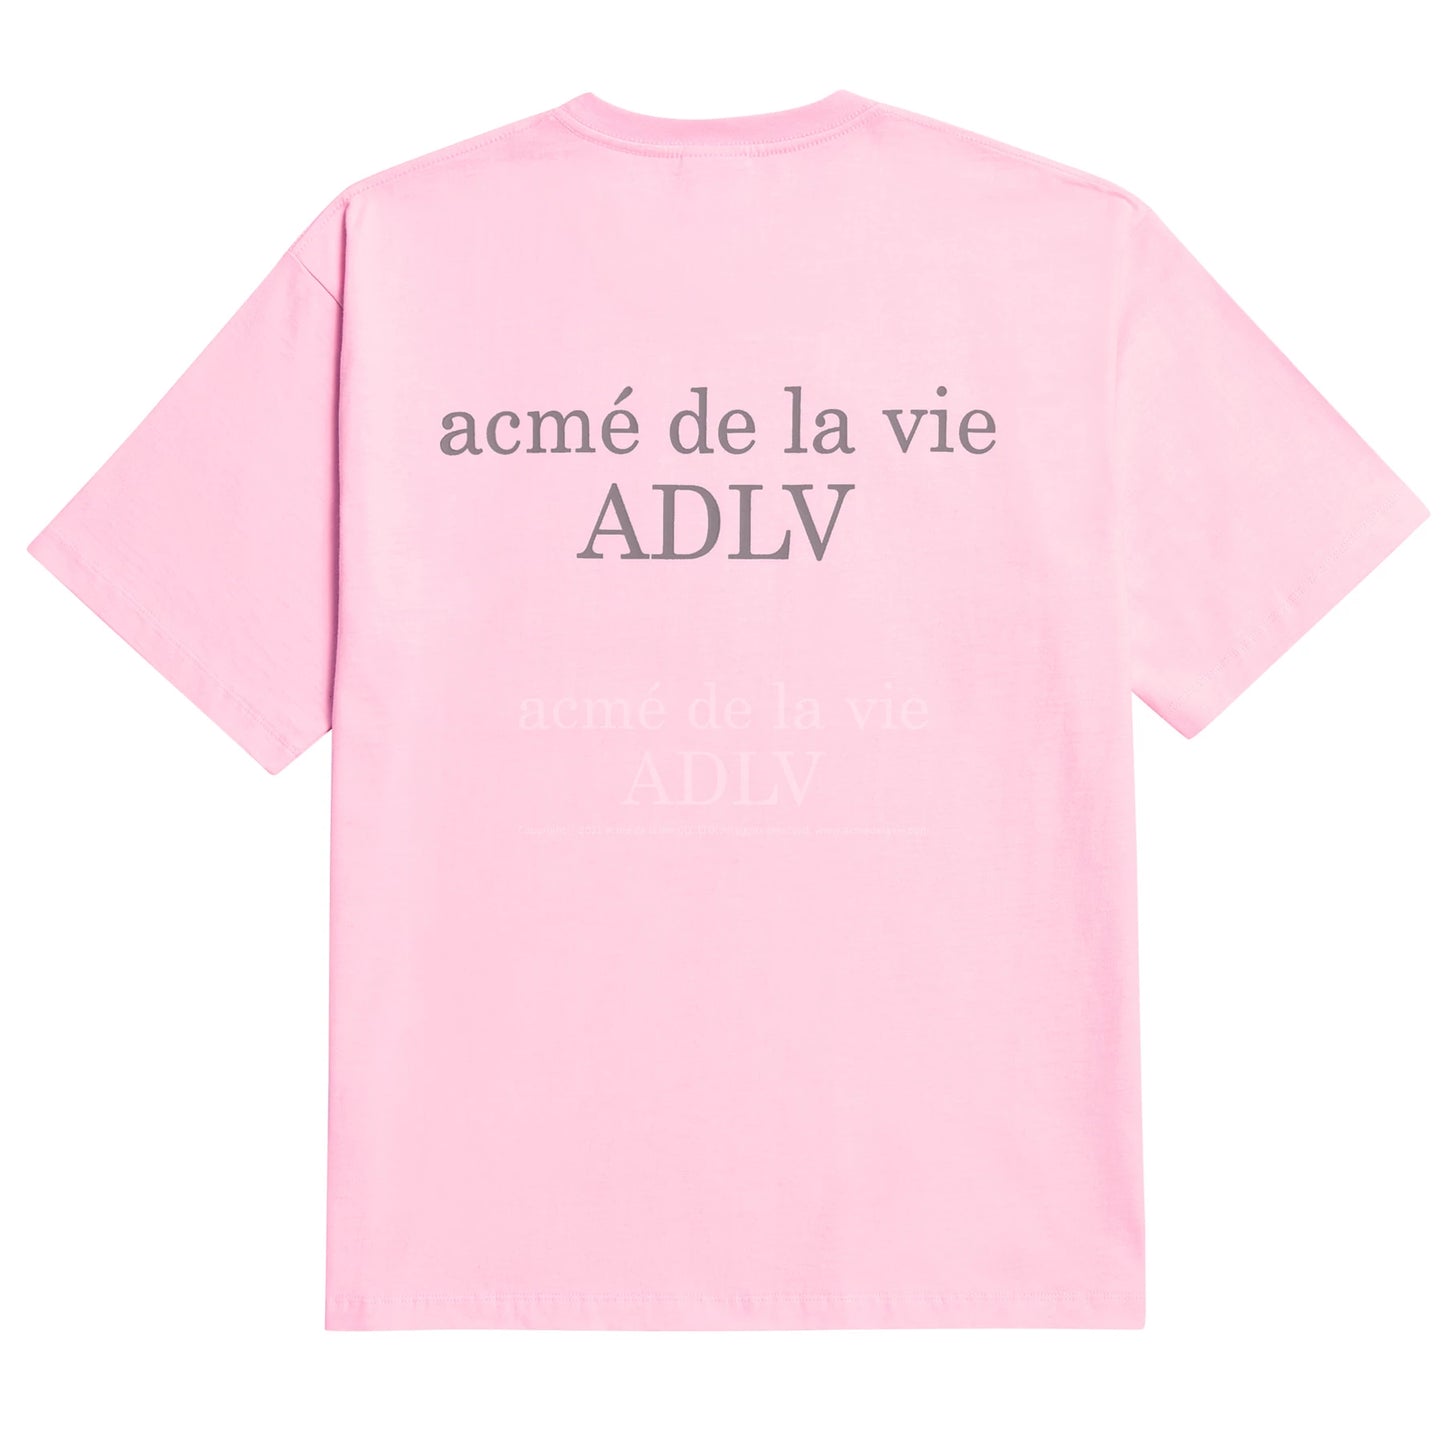 ADLV T-SHIRT (30)